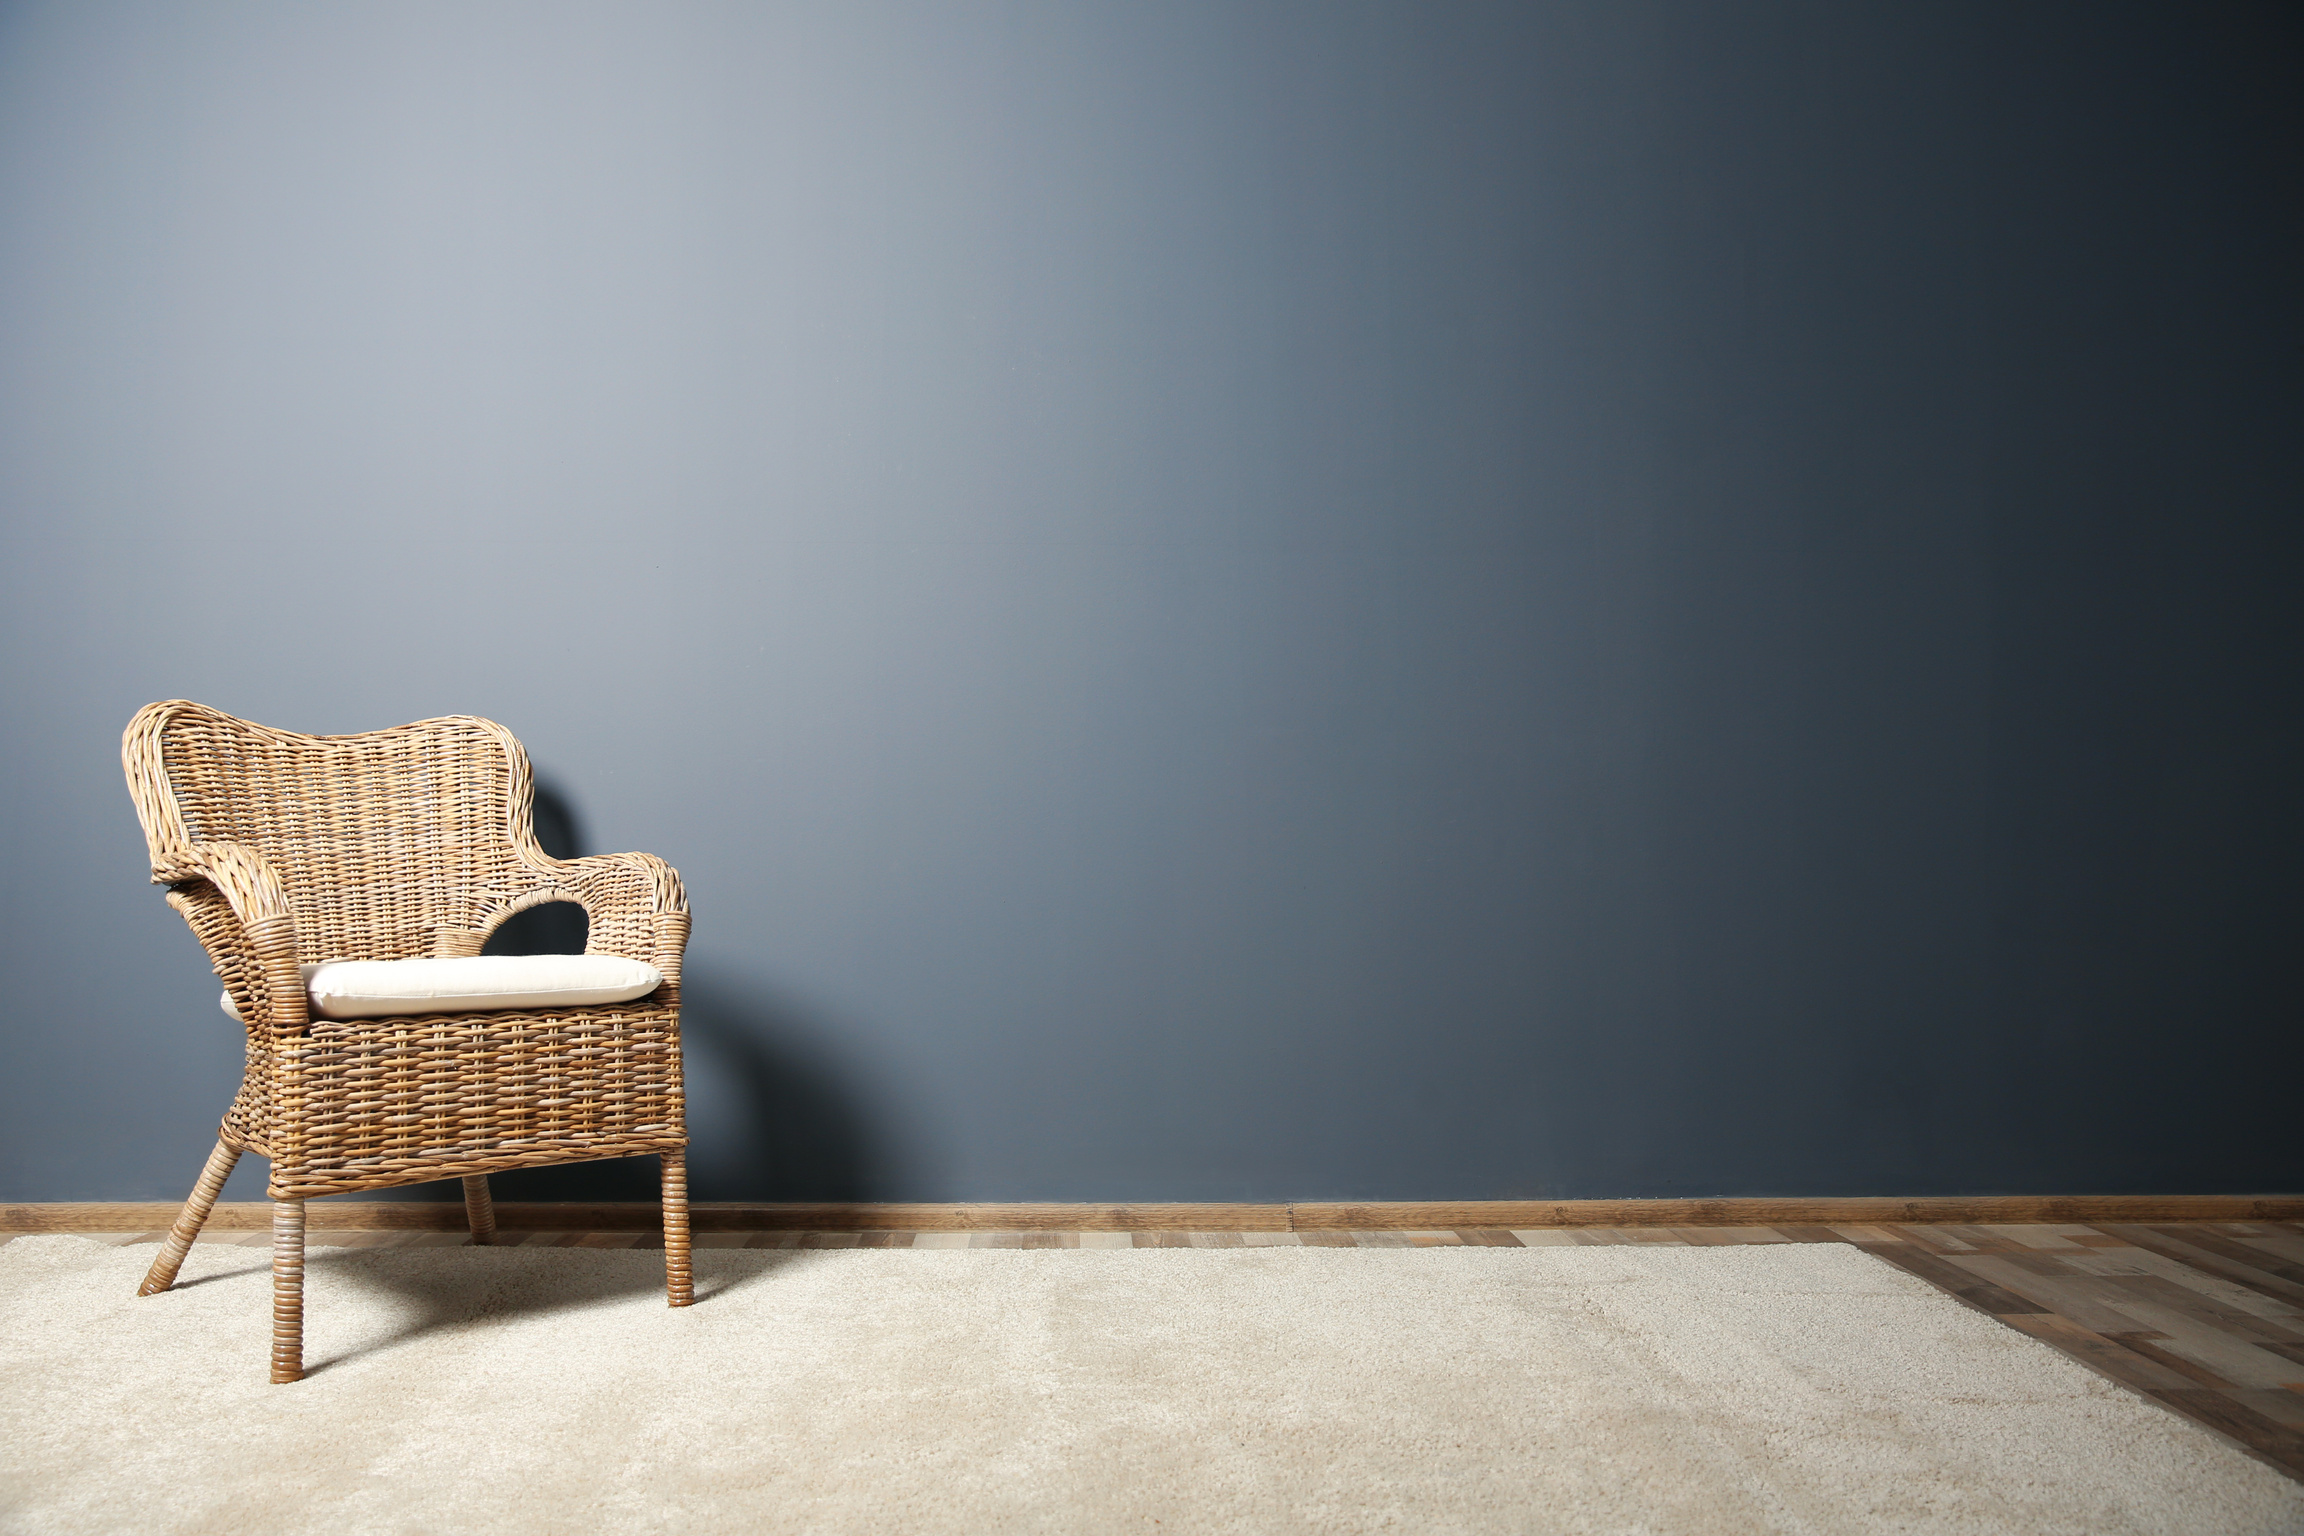 Wicker Chair on Dark Grey Wall Background